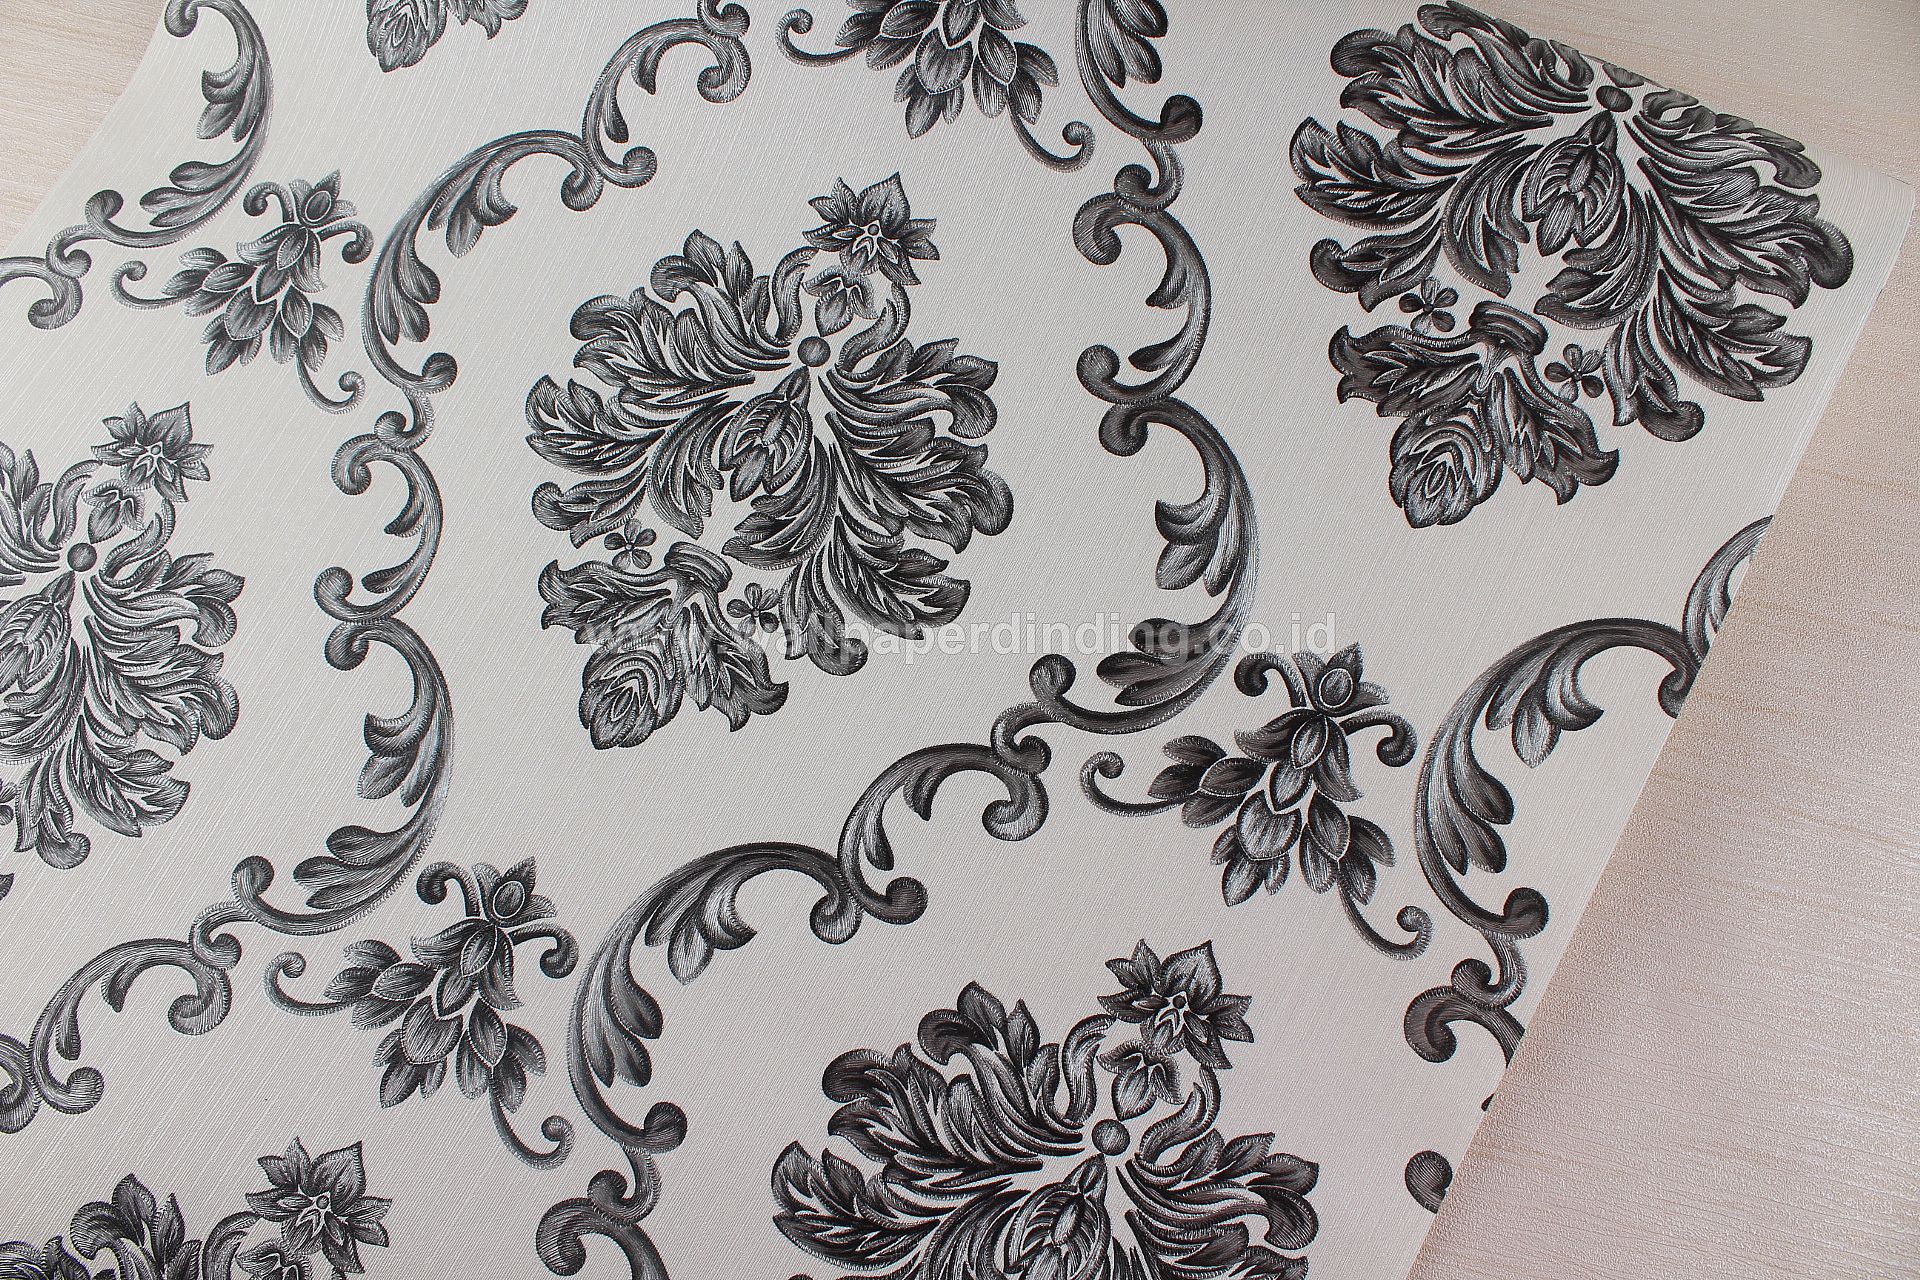 wallpaper hitam,pattern,motif,visual arts,design,textile